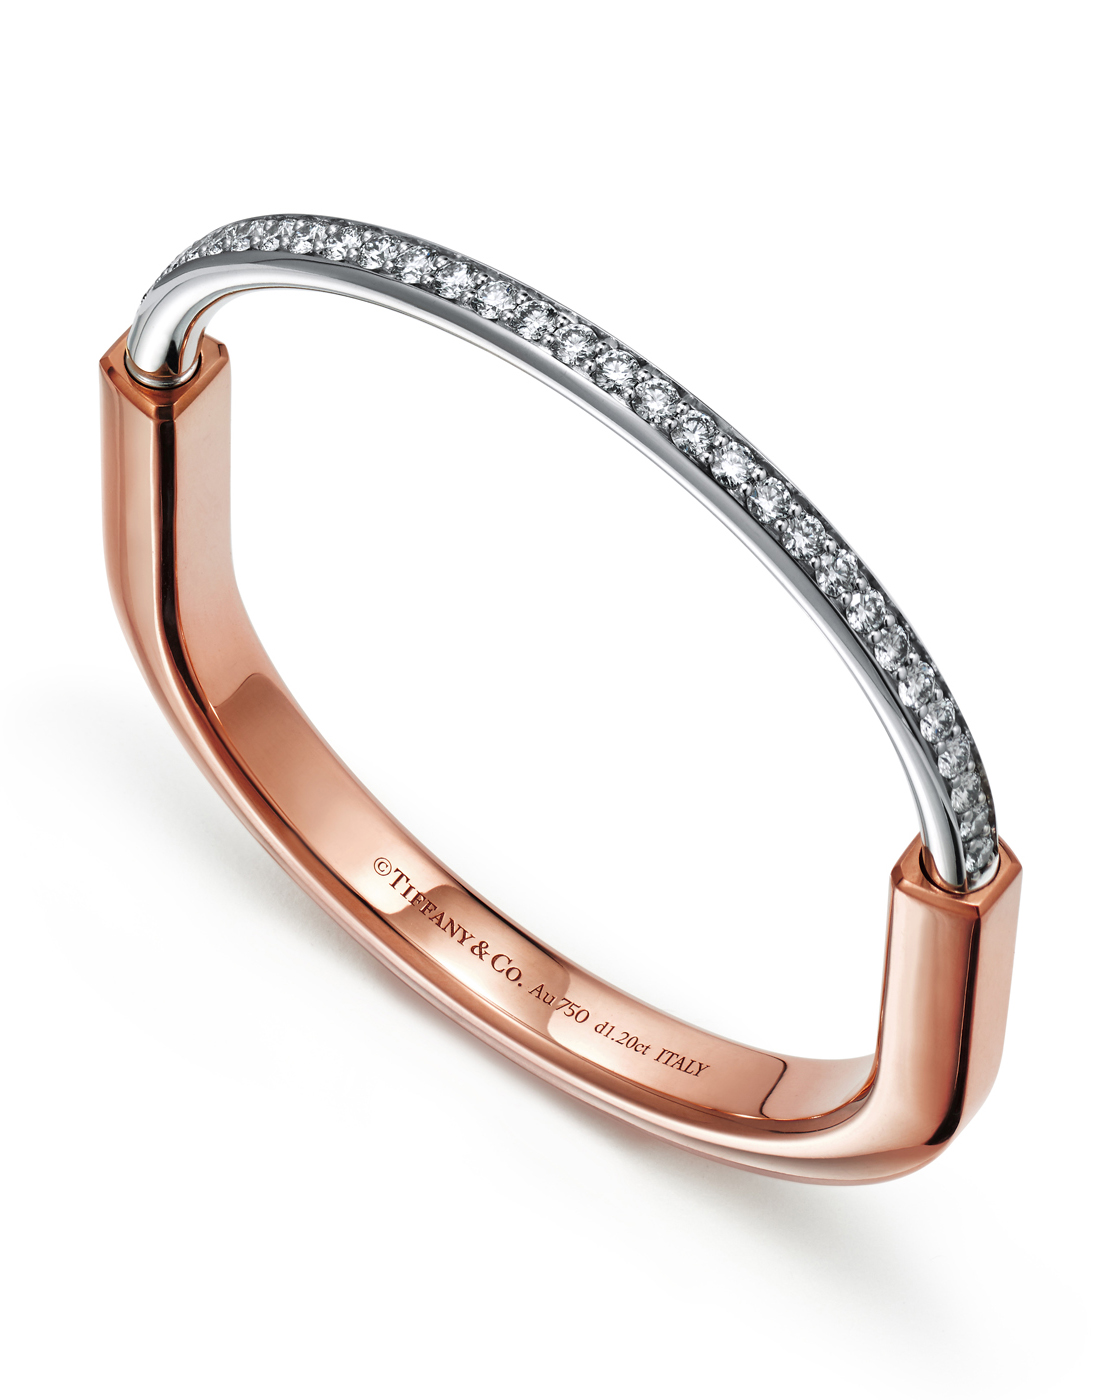 Buy Stylish Designer Women Bracelet Gold Plated Jewelry